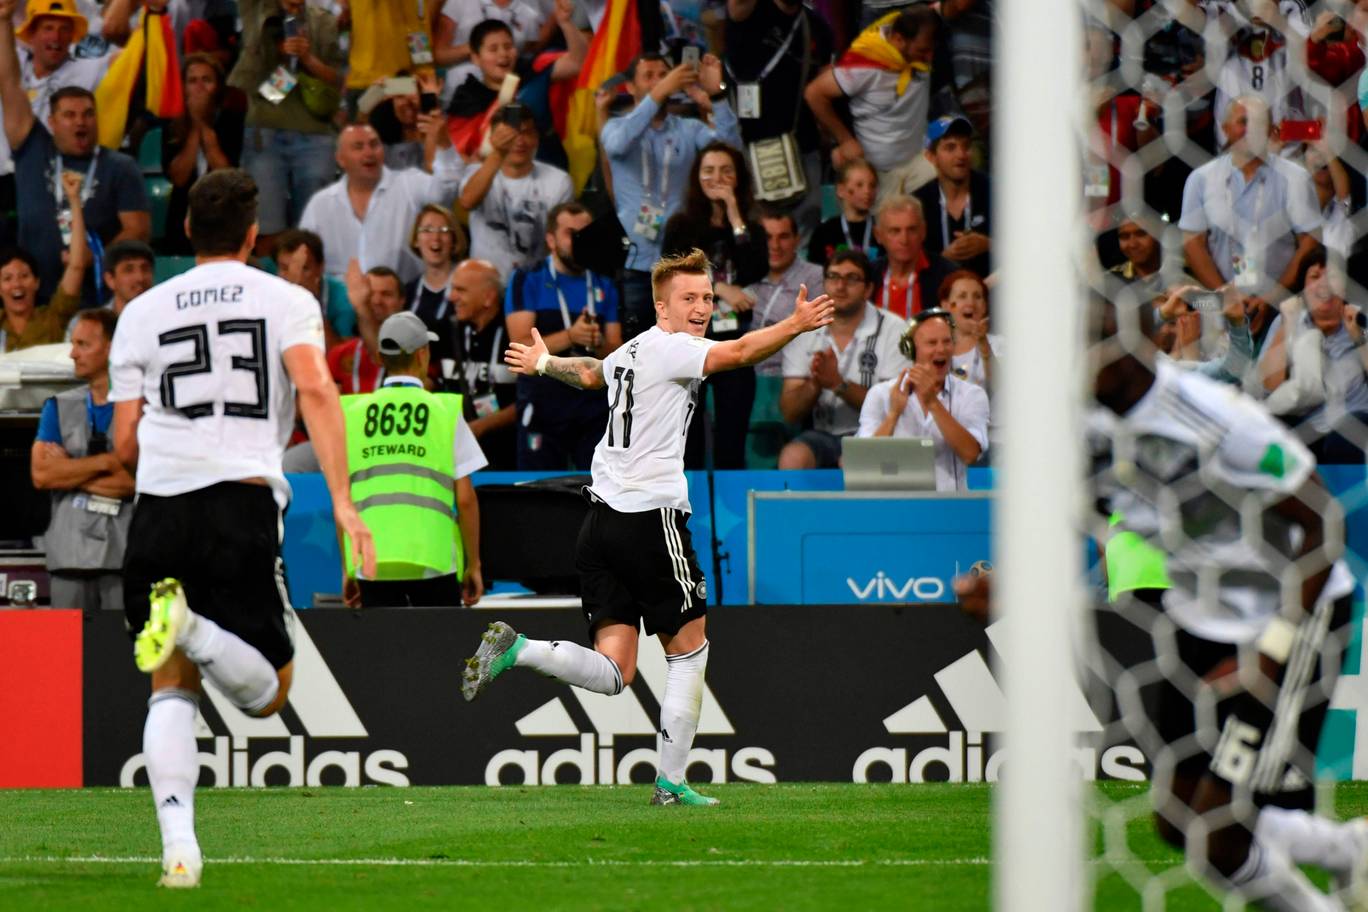 Marco Reus Celebrating a Goal vs Sweden